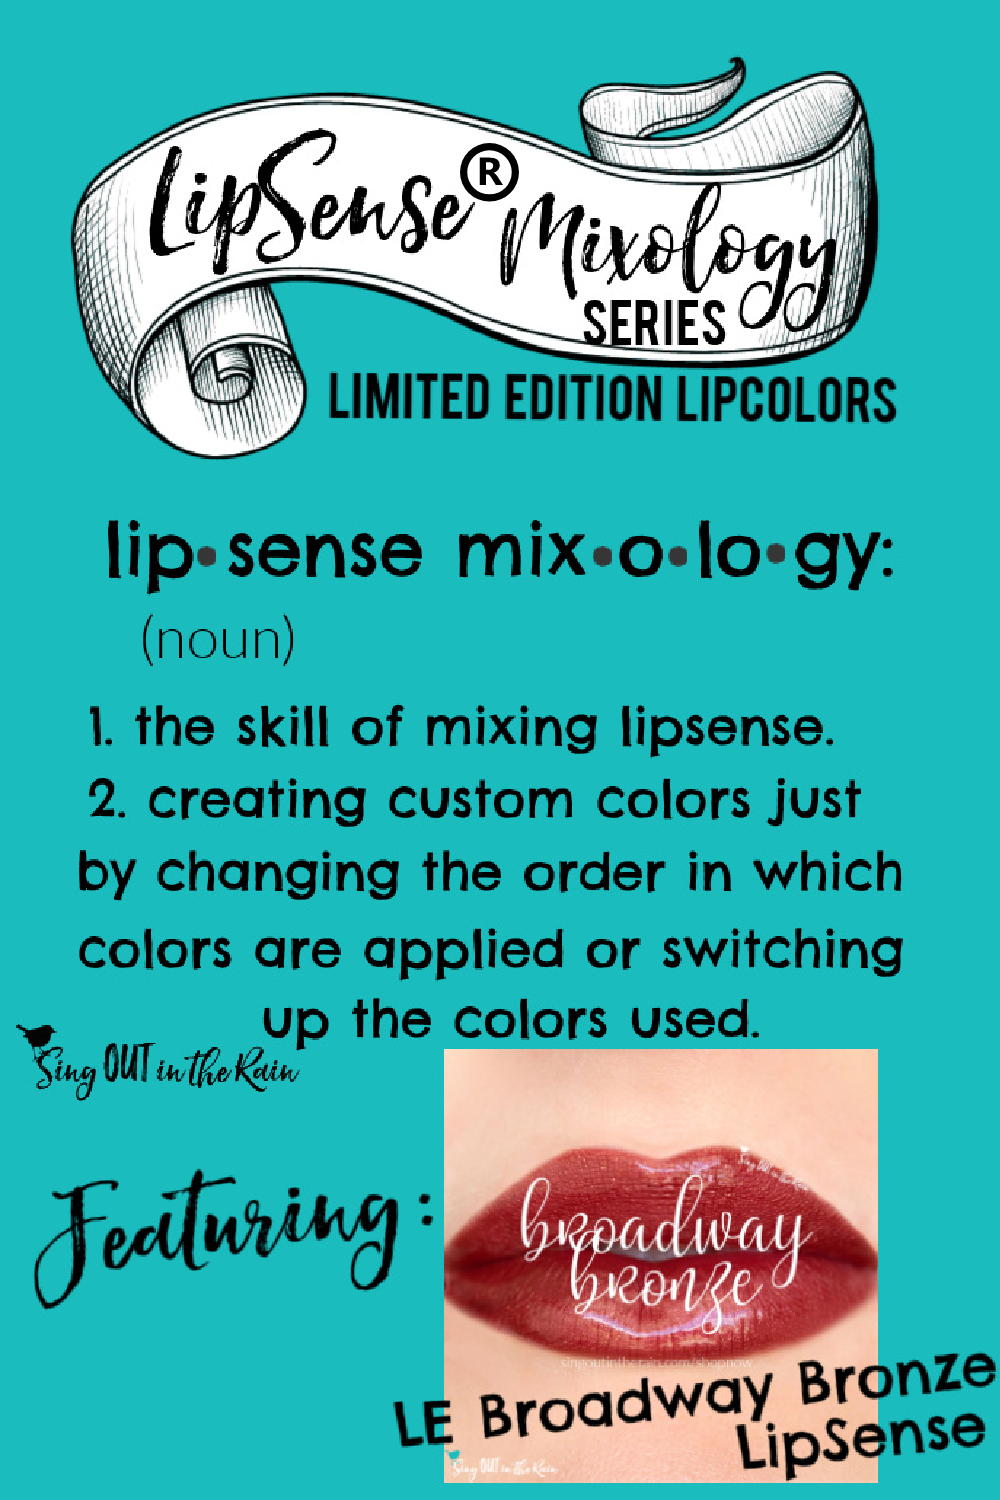 The Ultimate Guide to Broadway Bronze LipSense Mixology